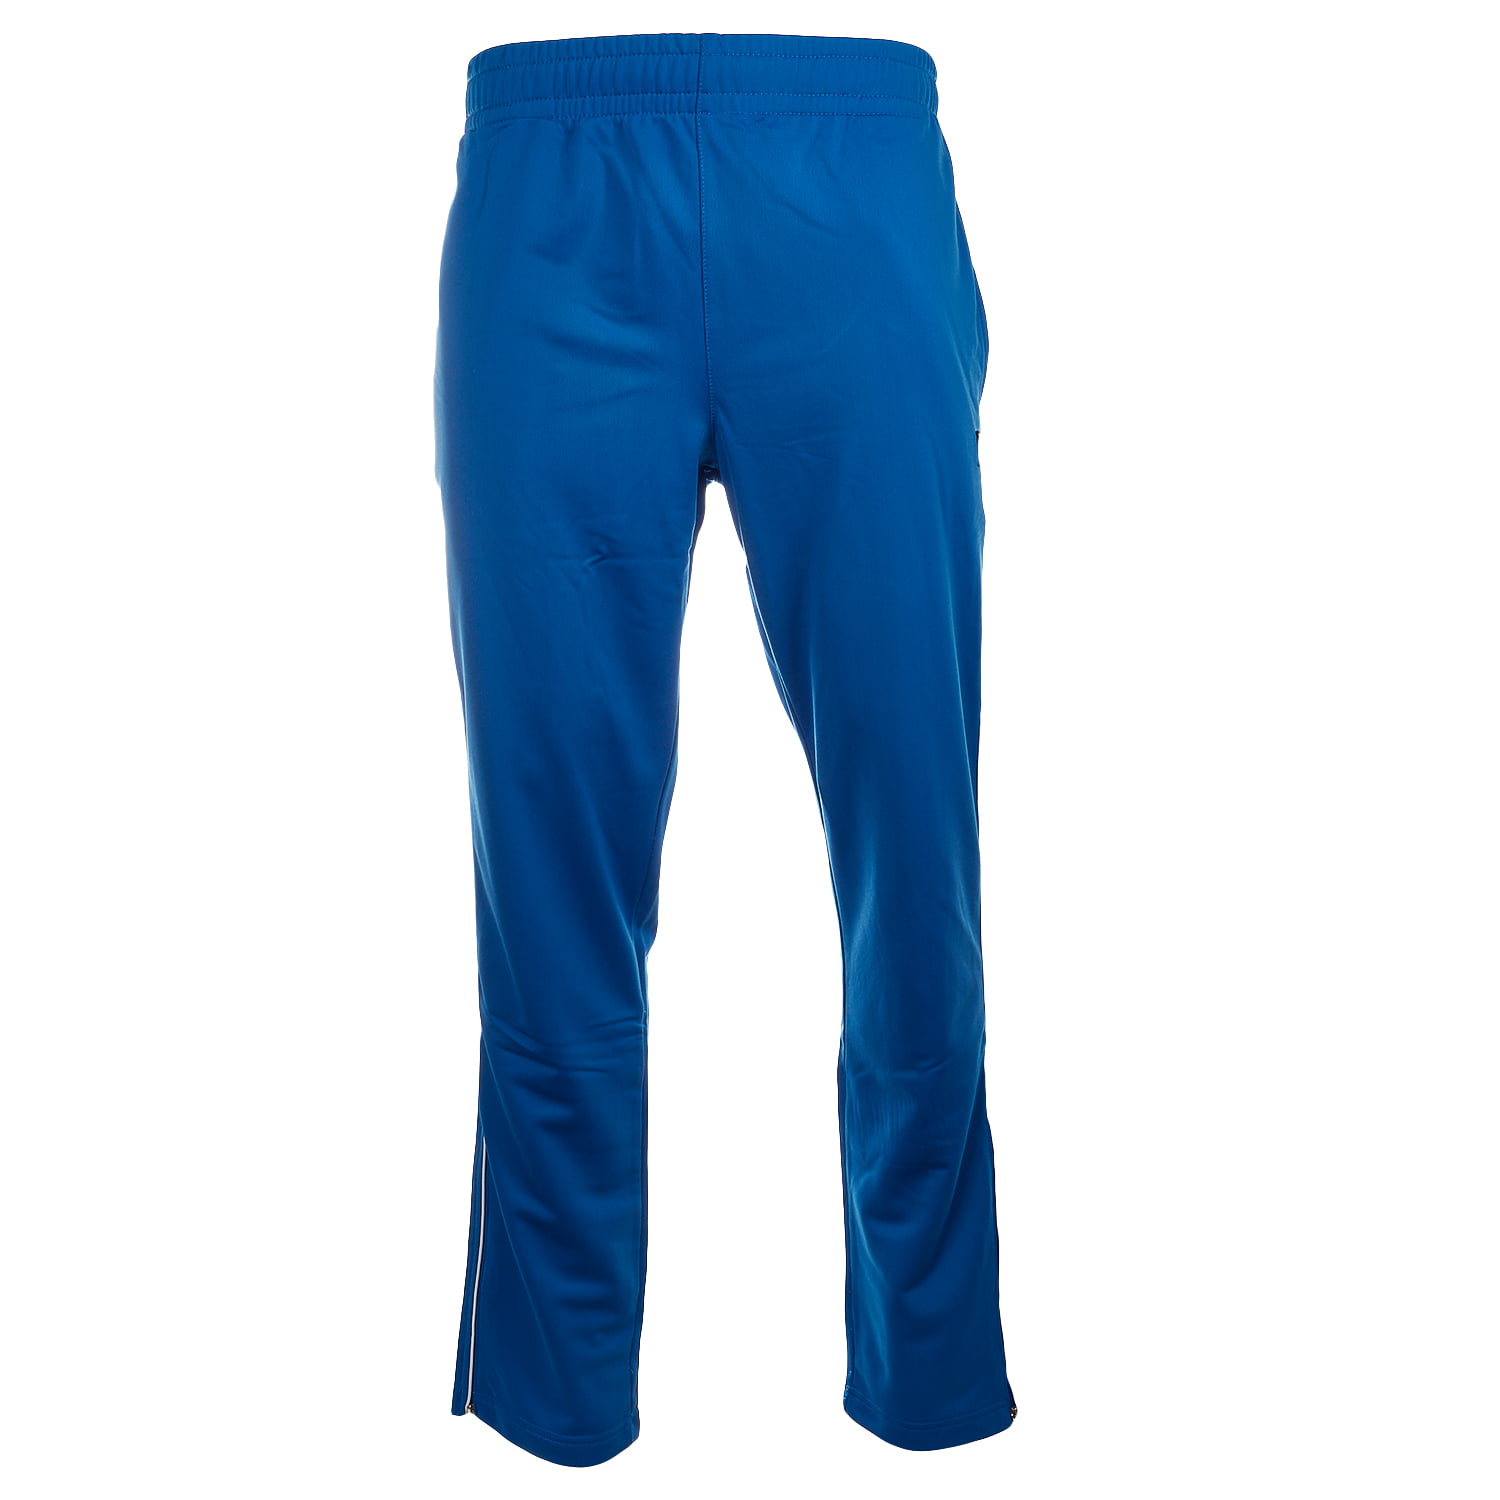 Fila ITALIA TRACK PANTS - Blue - Mens - XXL - Walmart.com